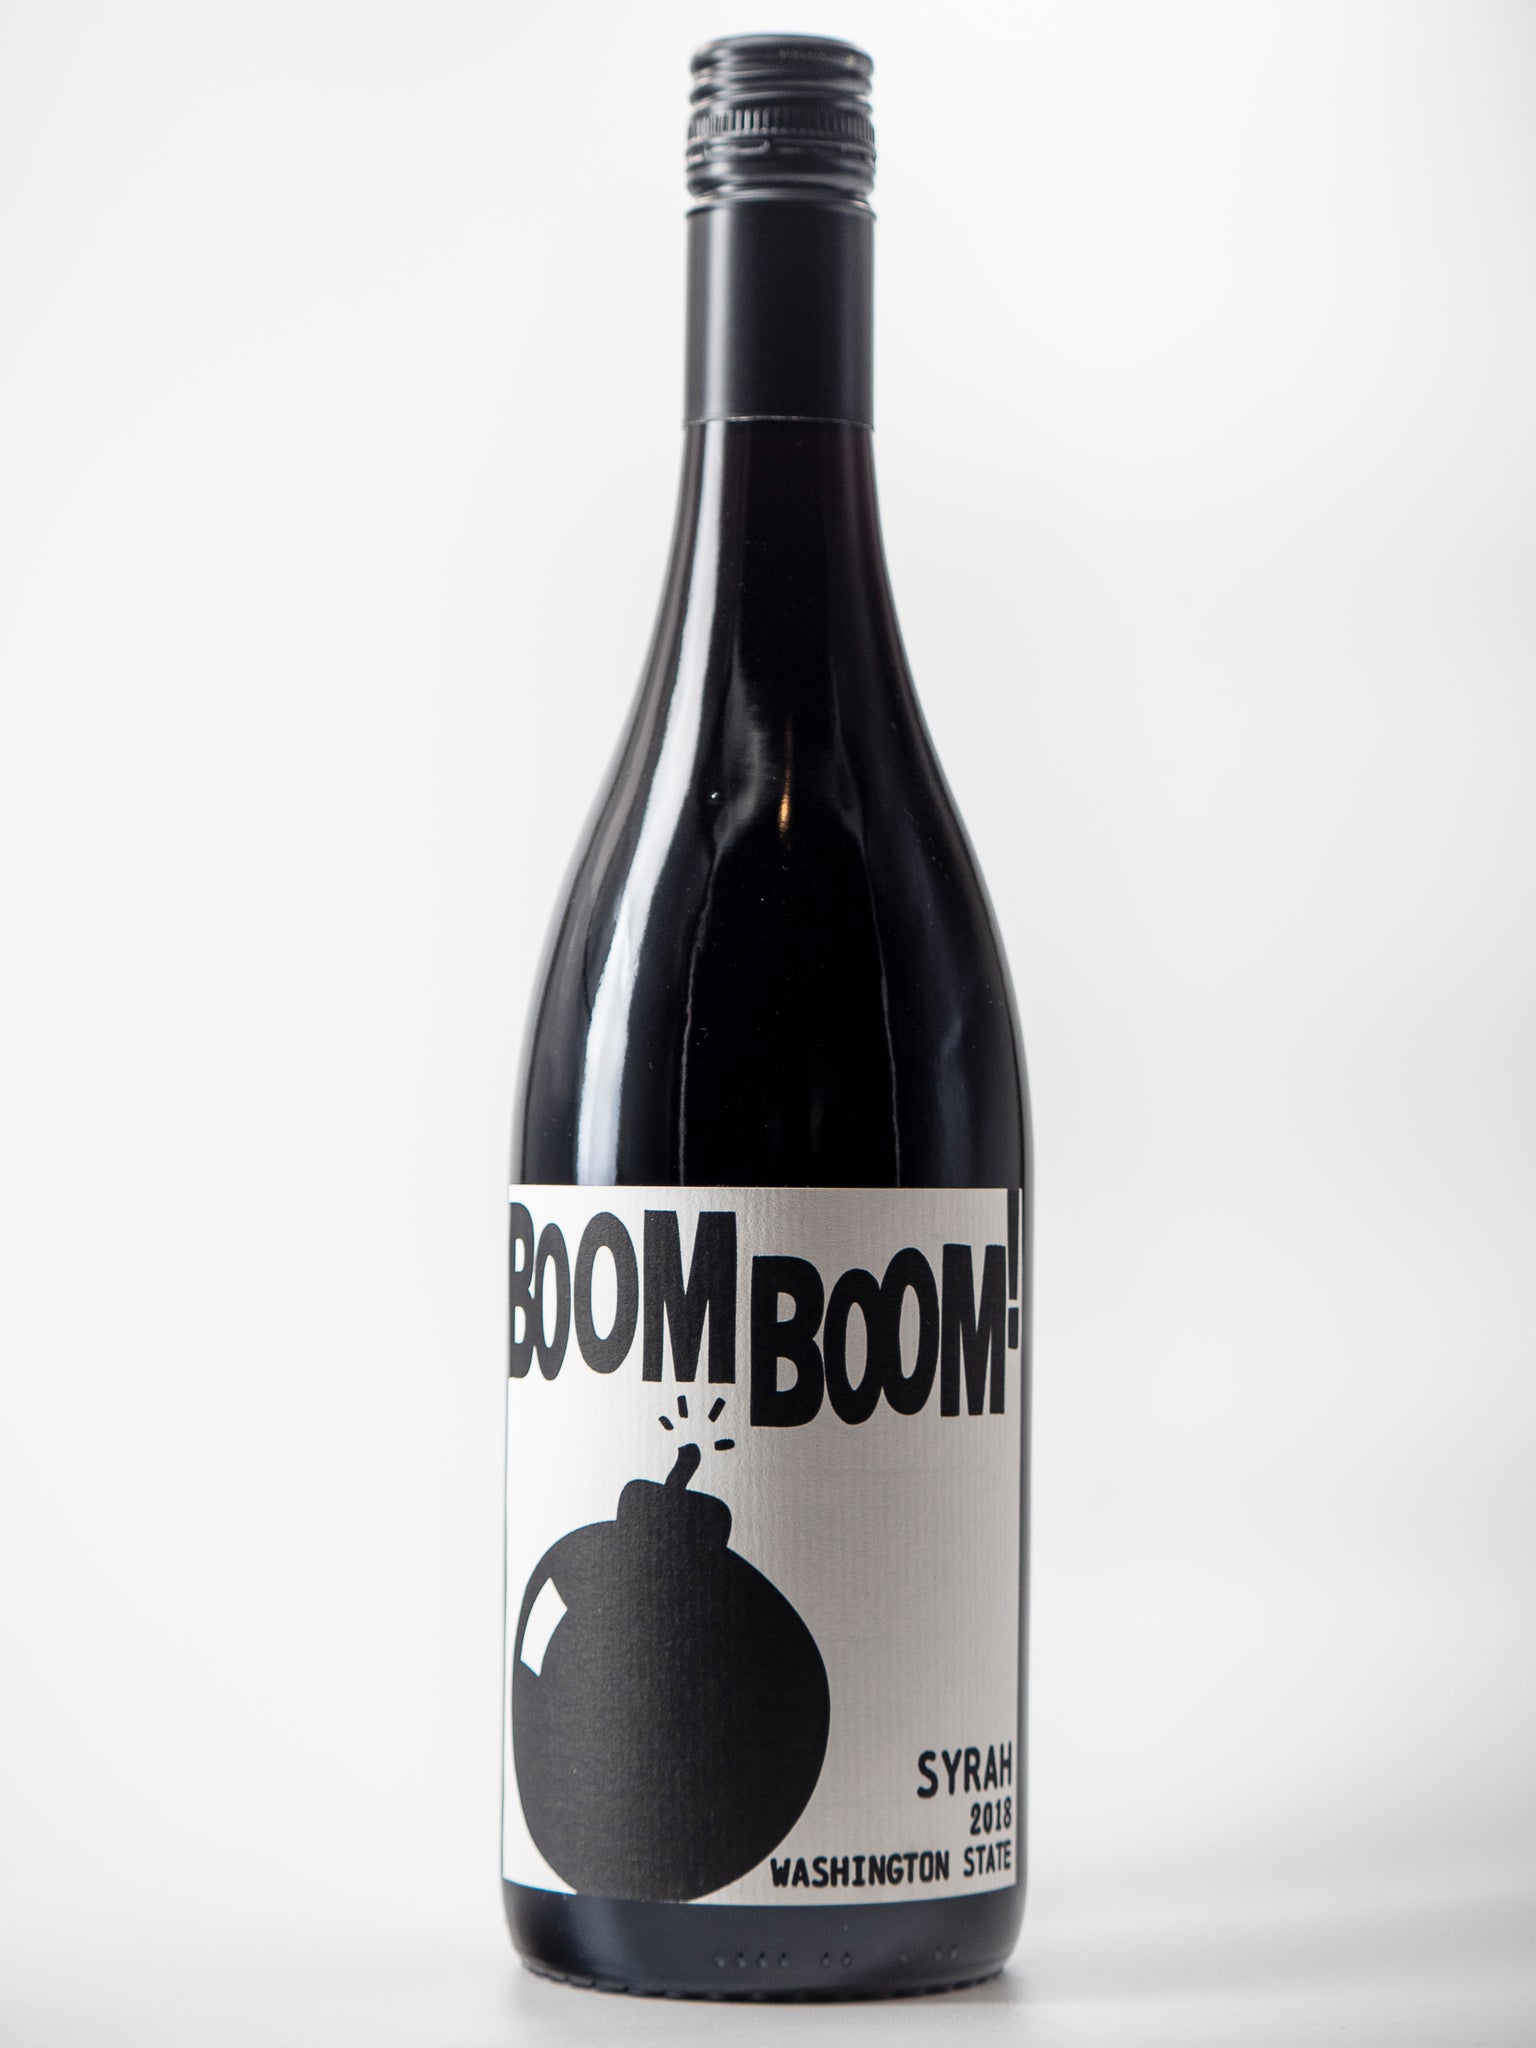 Syrah, Charles Smith Wines, Boom Boom